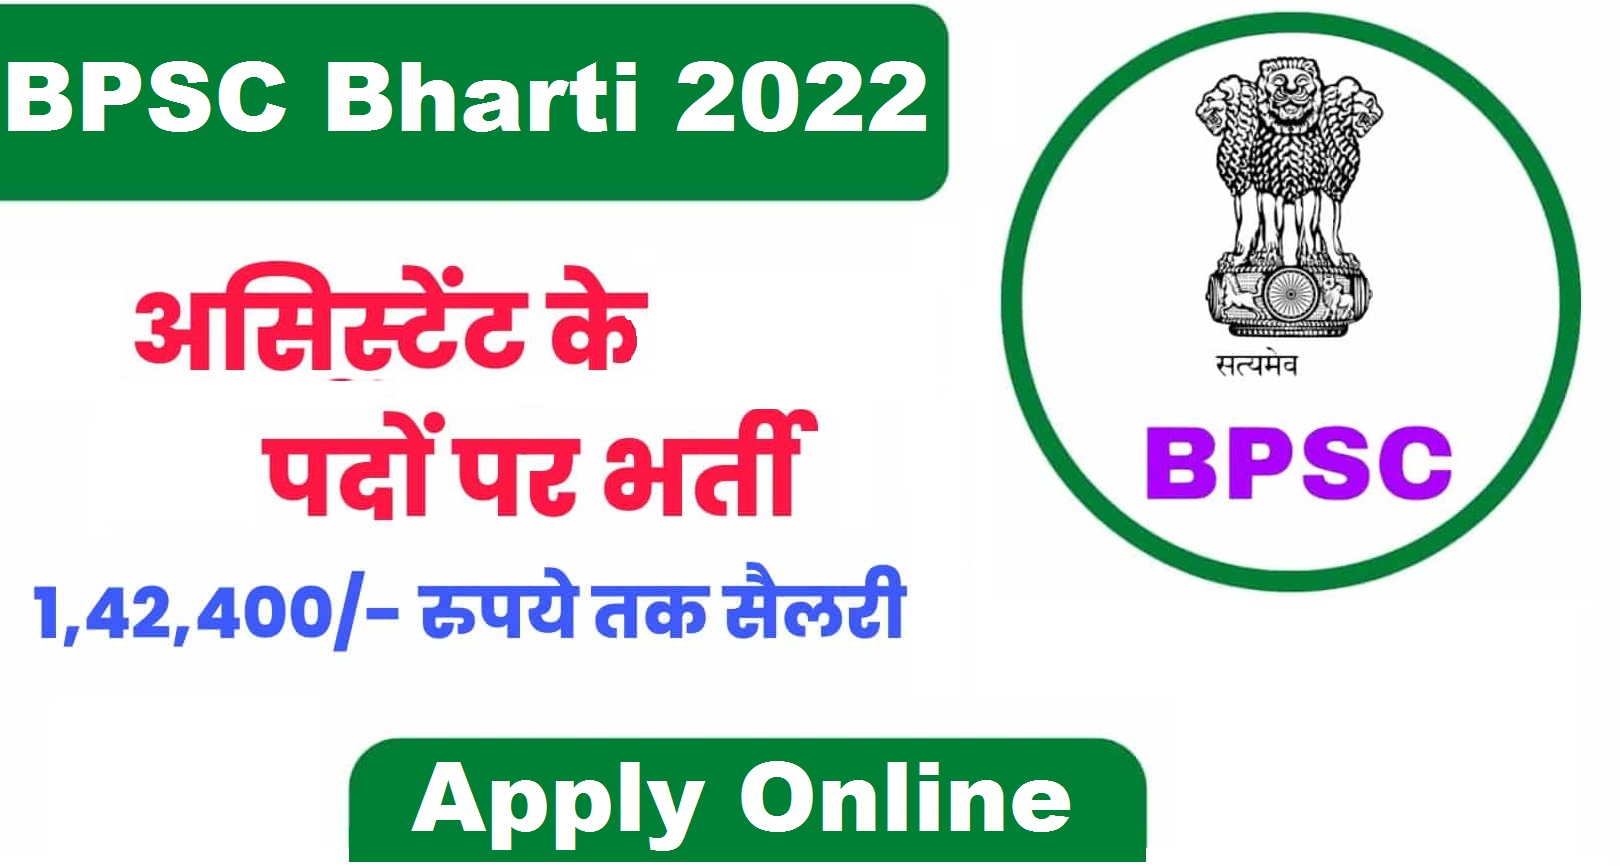 BPSC Bharti 2022